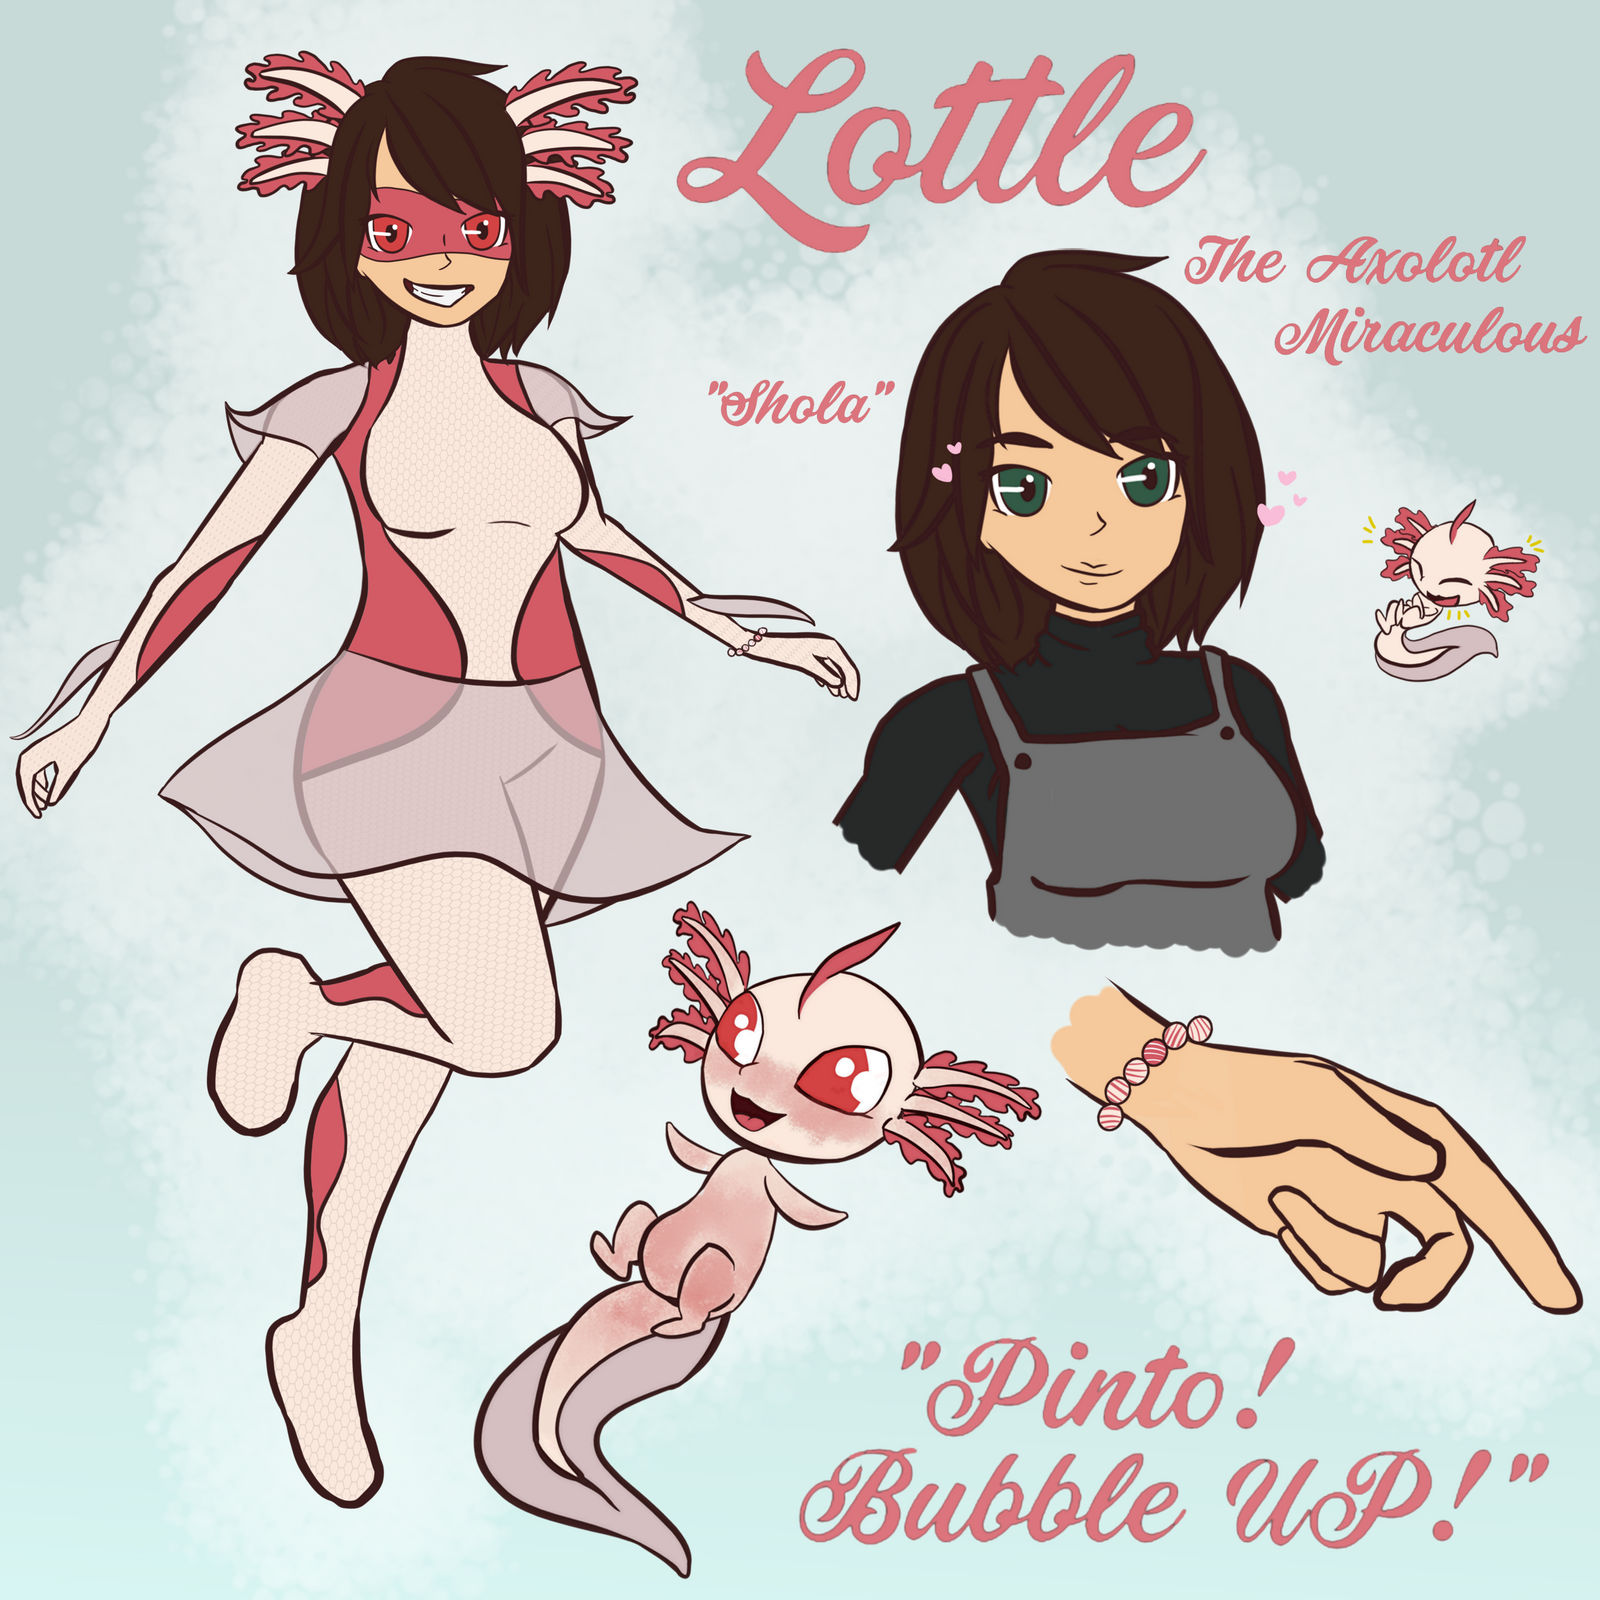 Lottle! The Axolotl Miraculous - Miraculous OC by kakkoii-princess on ...